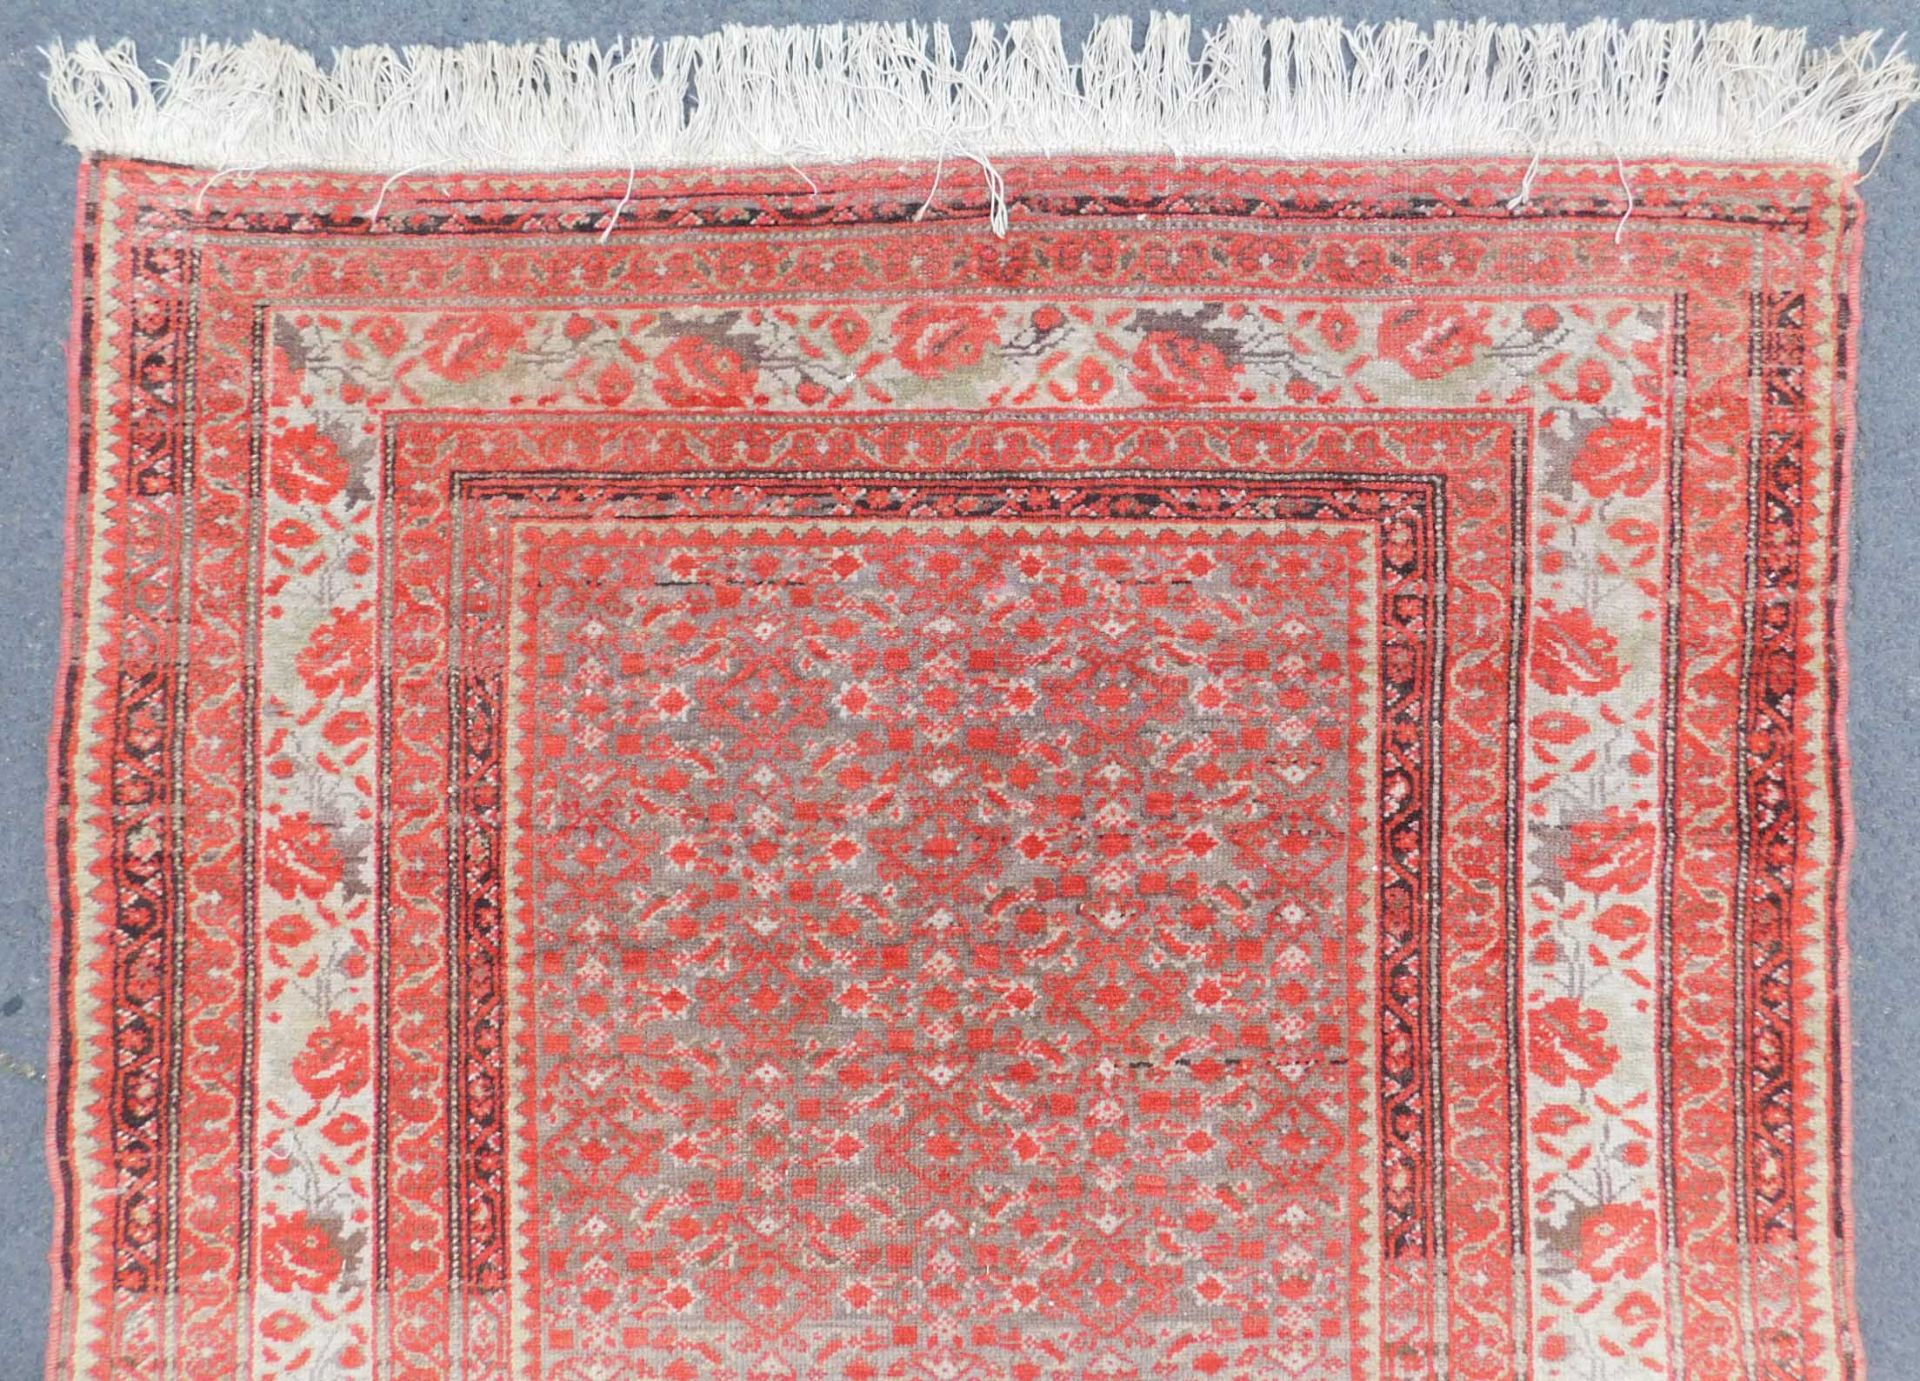 Malayer Persian carpet. Iran. Antique, around 100 - 150 years old. - Bild 4 aus 6